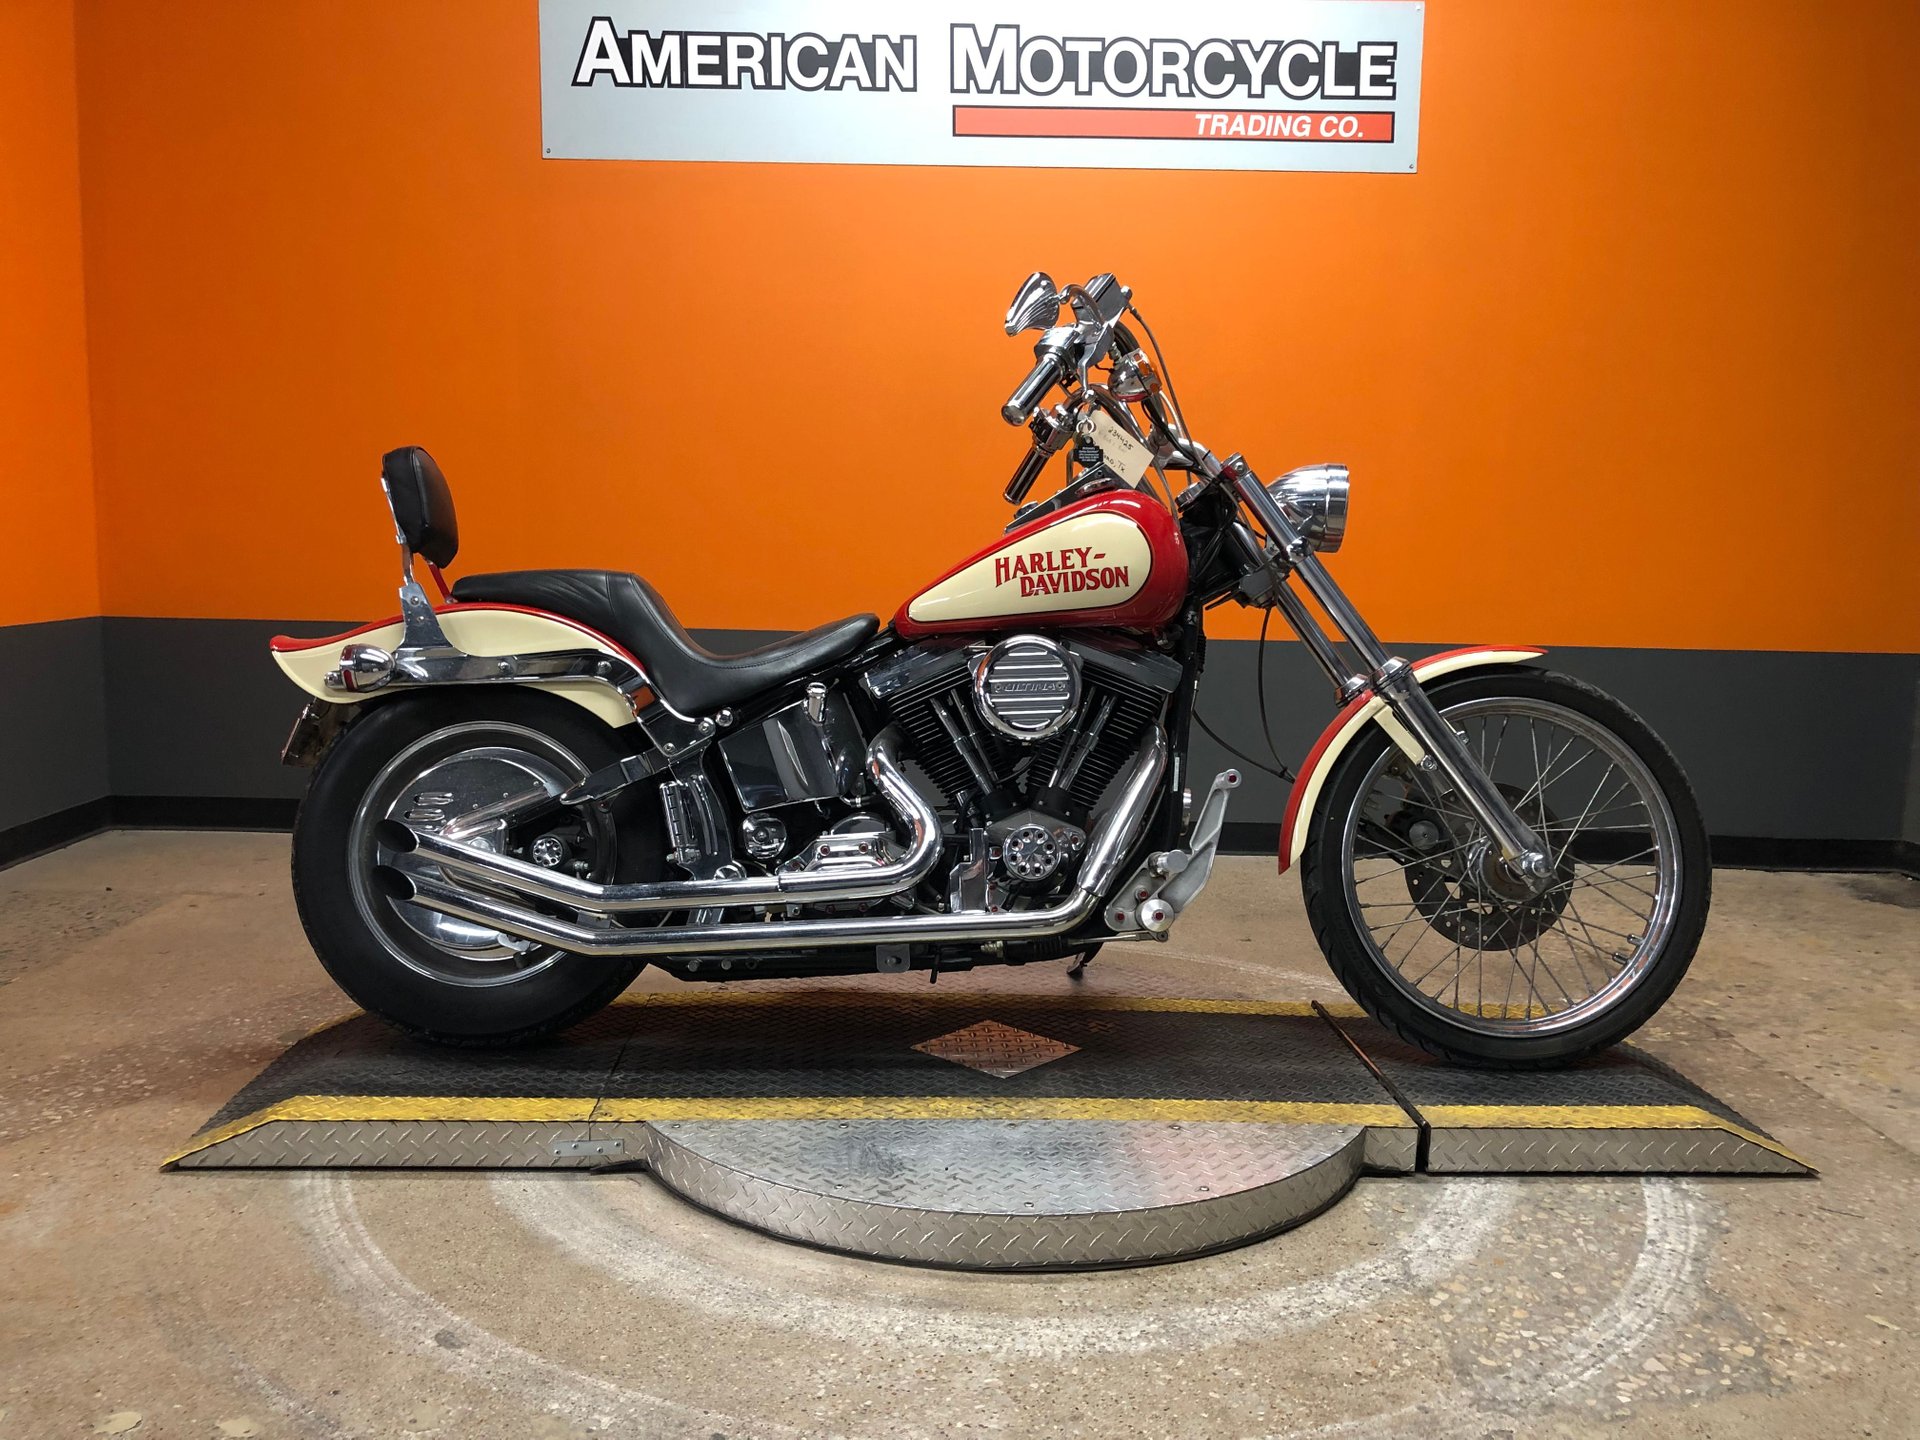 1995 Harley-Davidson Softail Custom | American Motorcycle Trading Company -  Used Harley Davidson Motorcycles